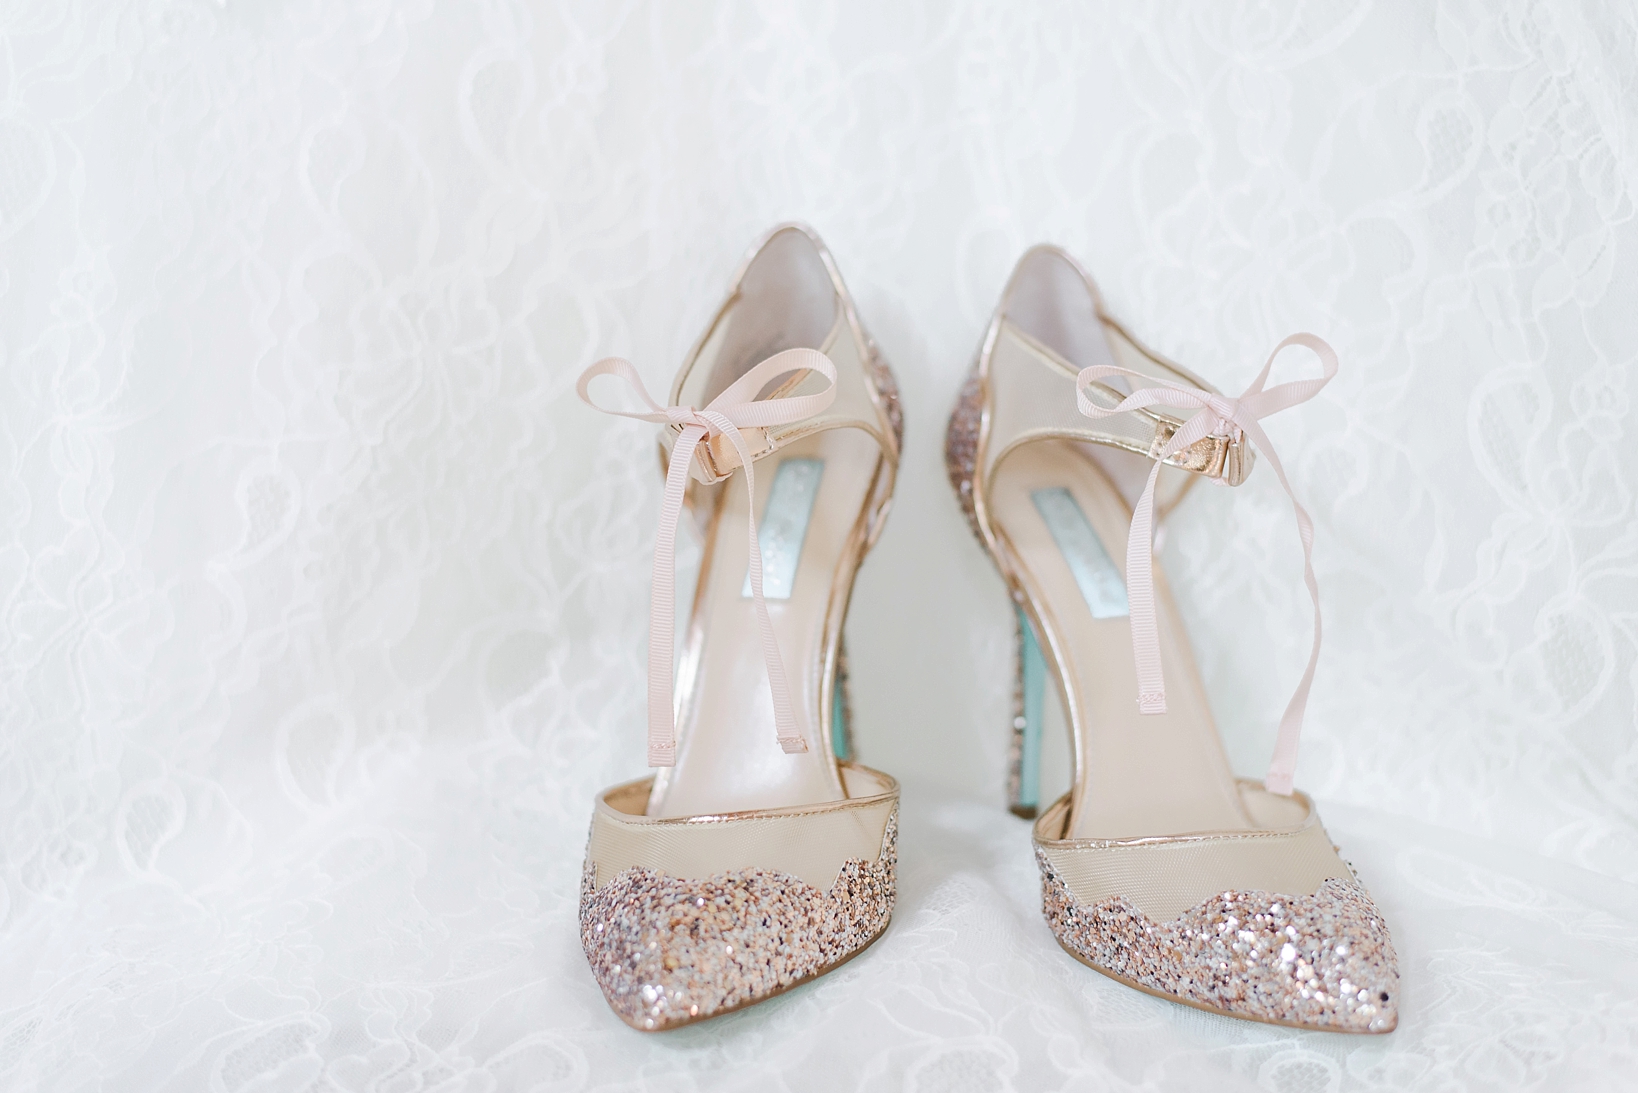 Betsey Johnson heels with glitter on the bride's wedding dress